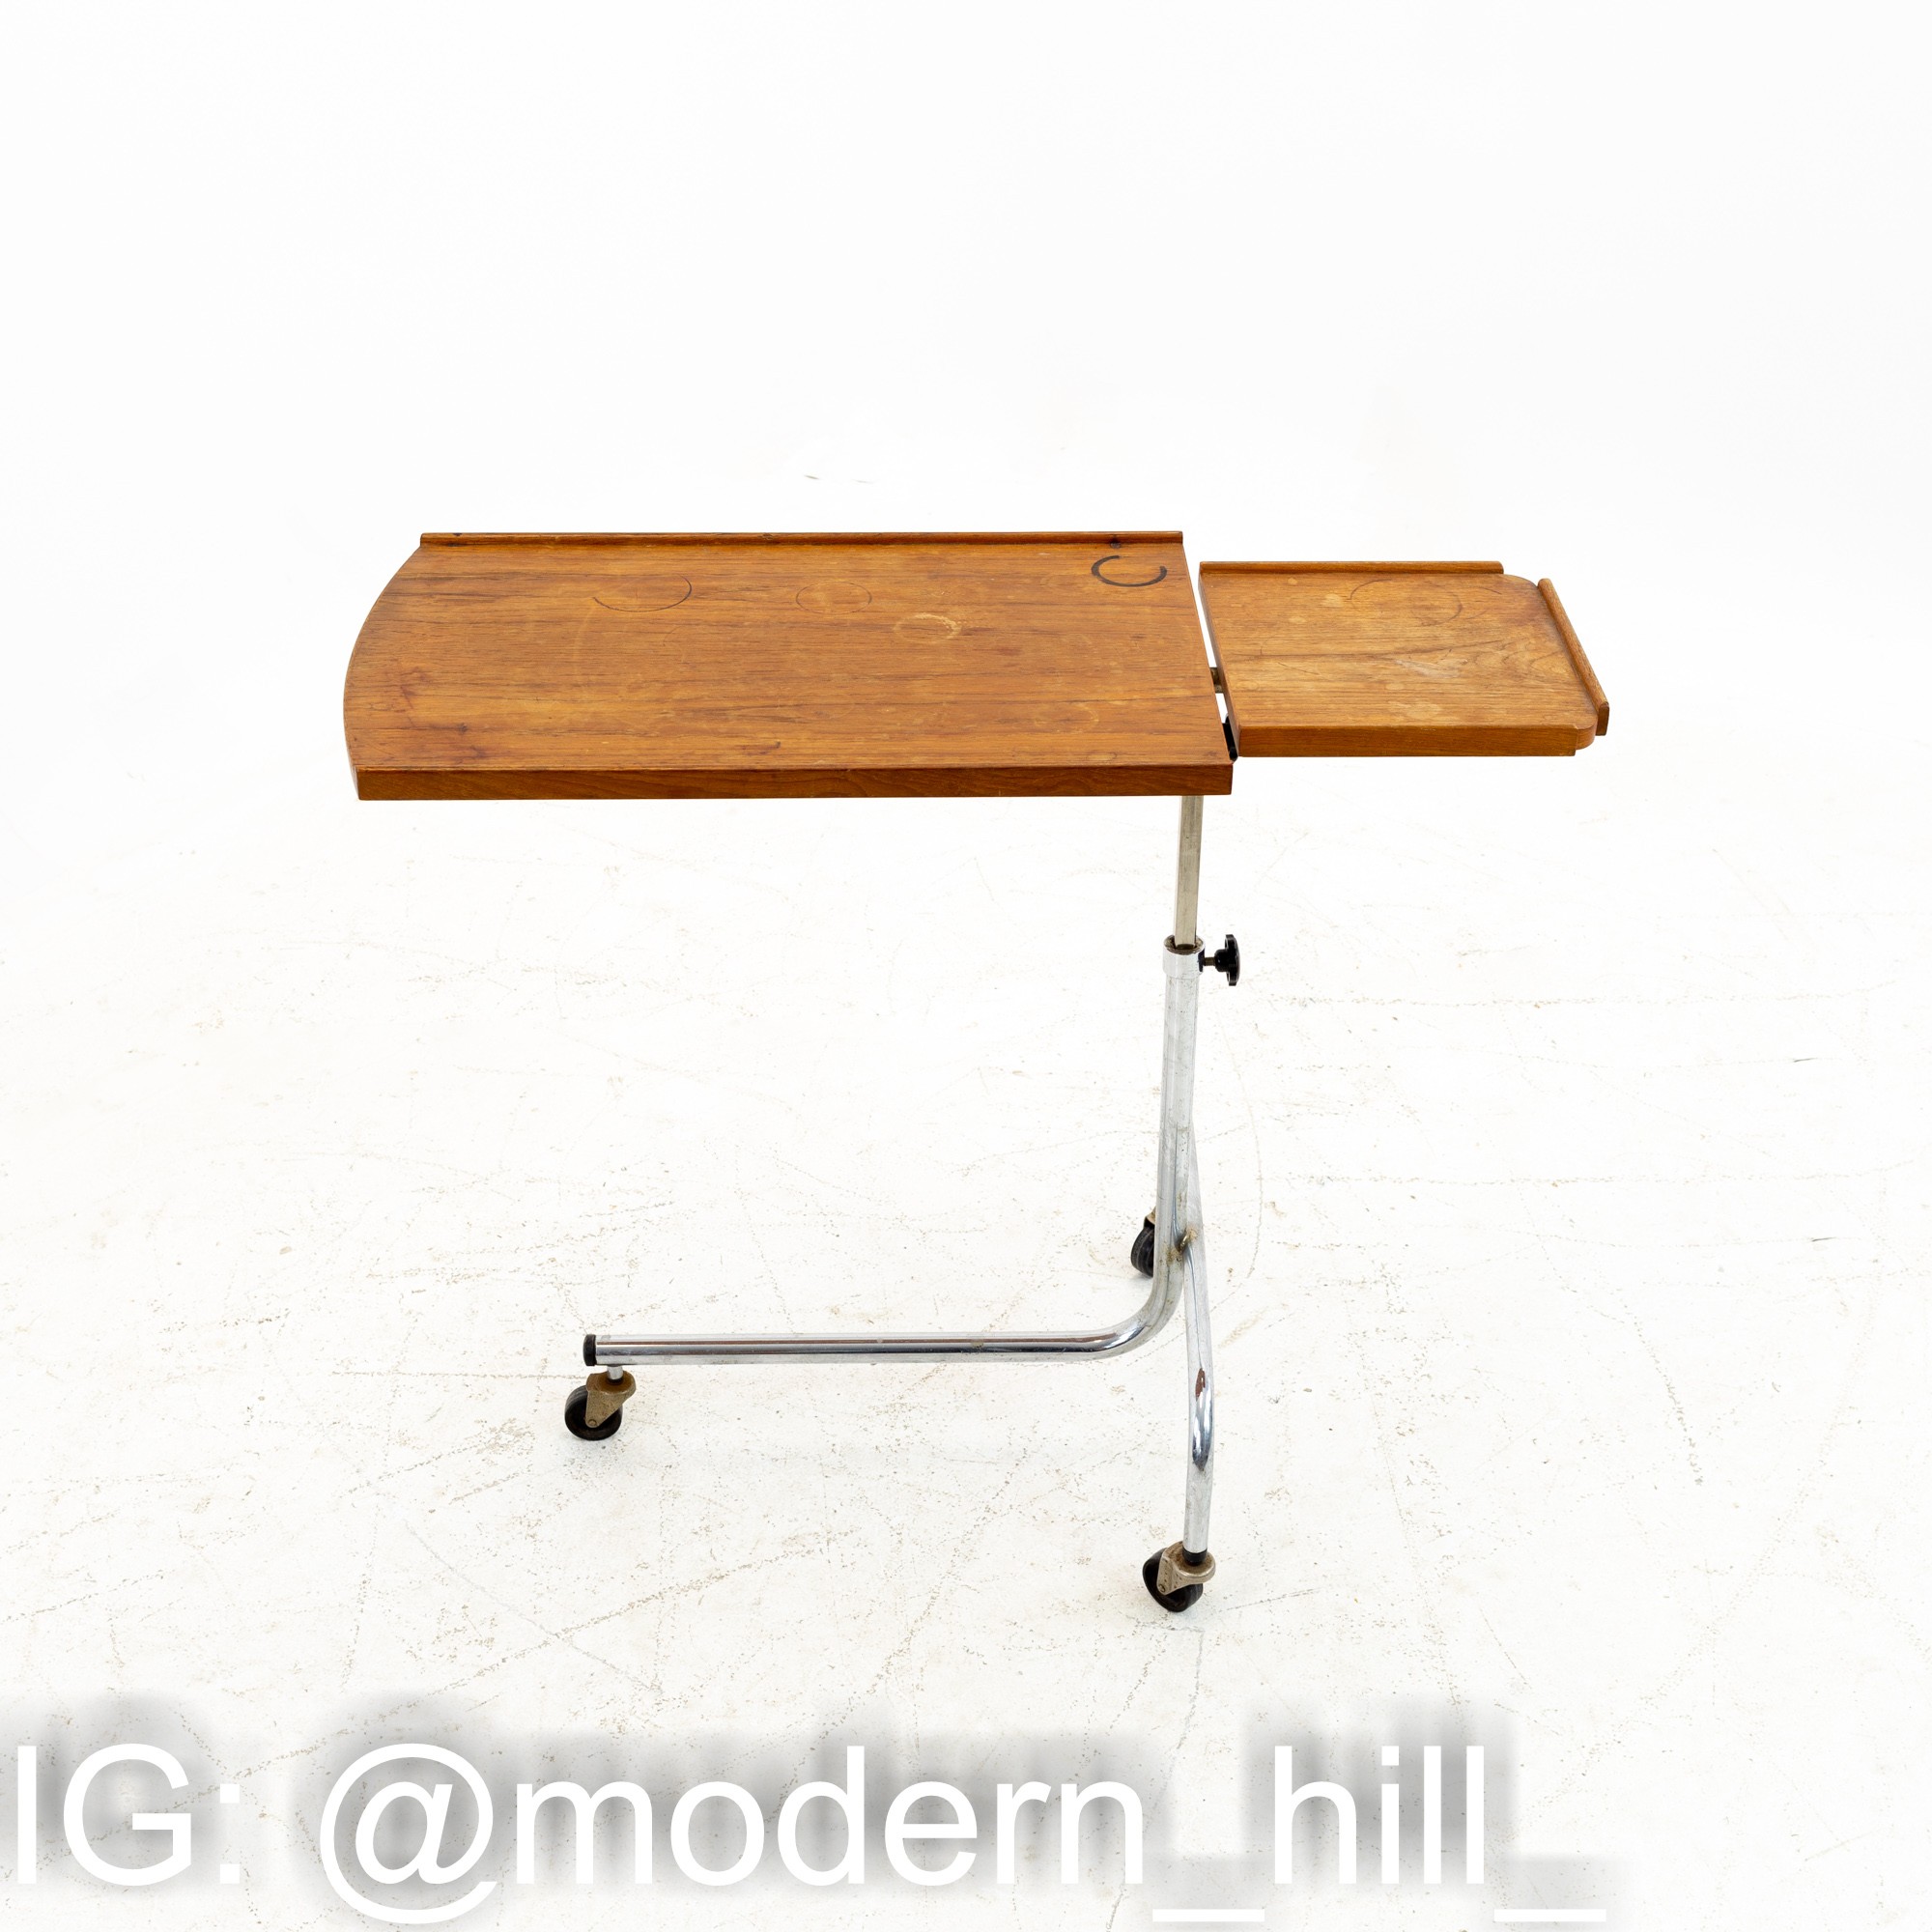 Hmn Mid Century Danish Teak Adjustable Tray Table